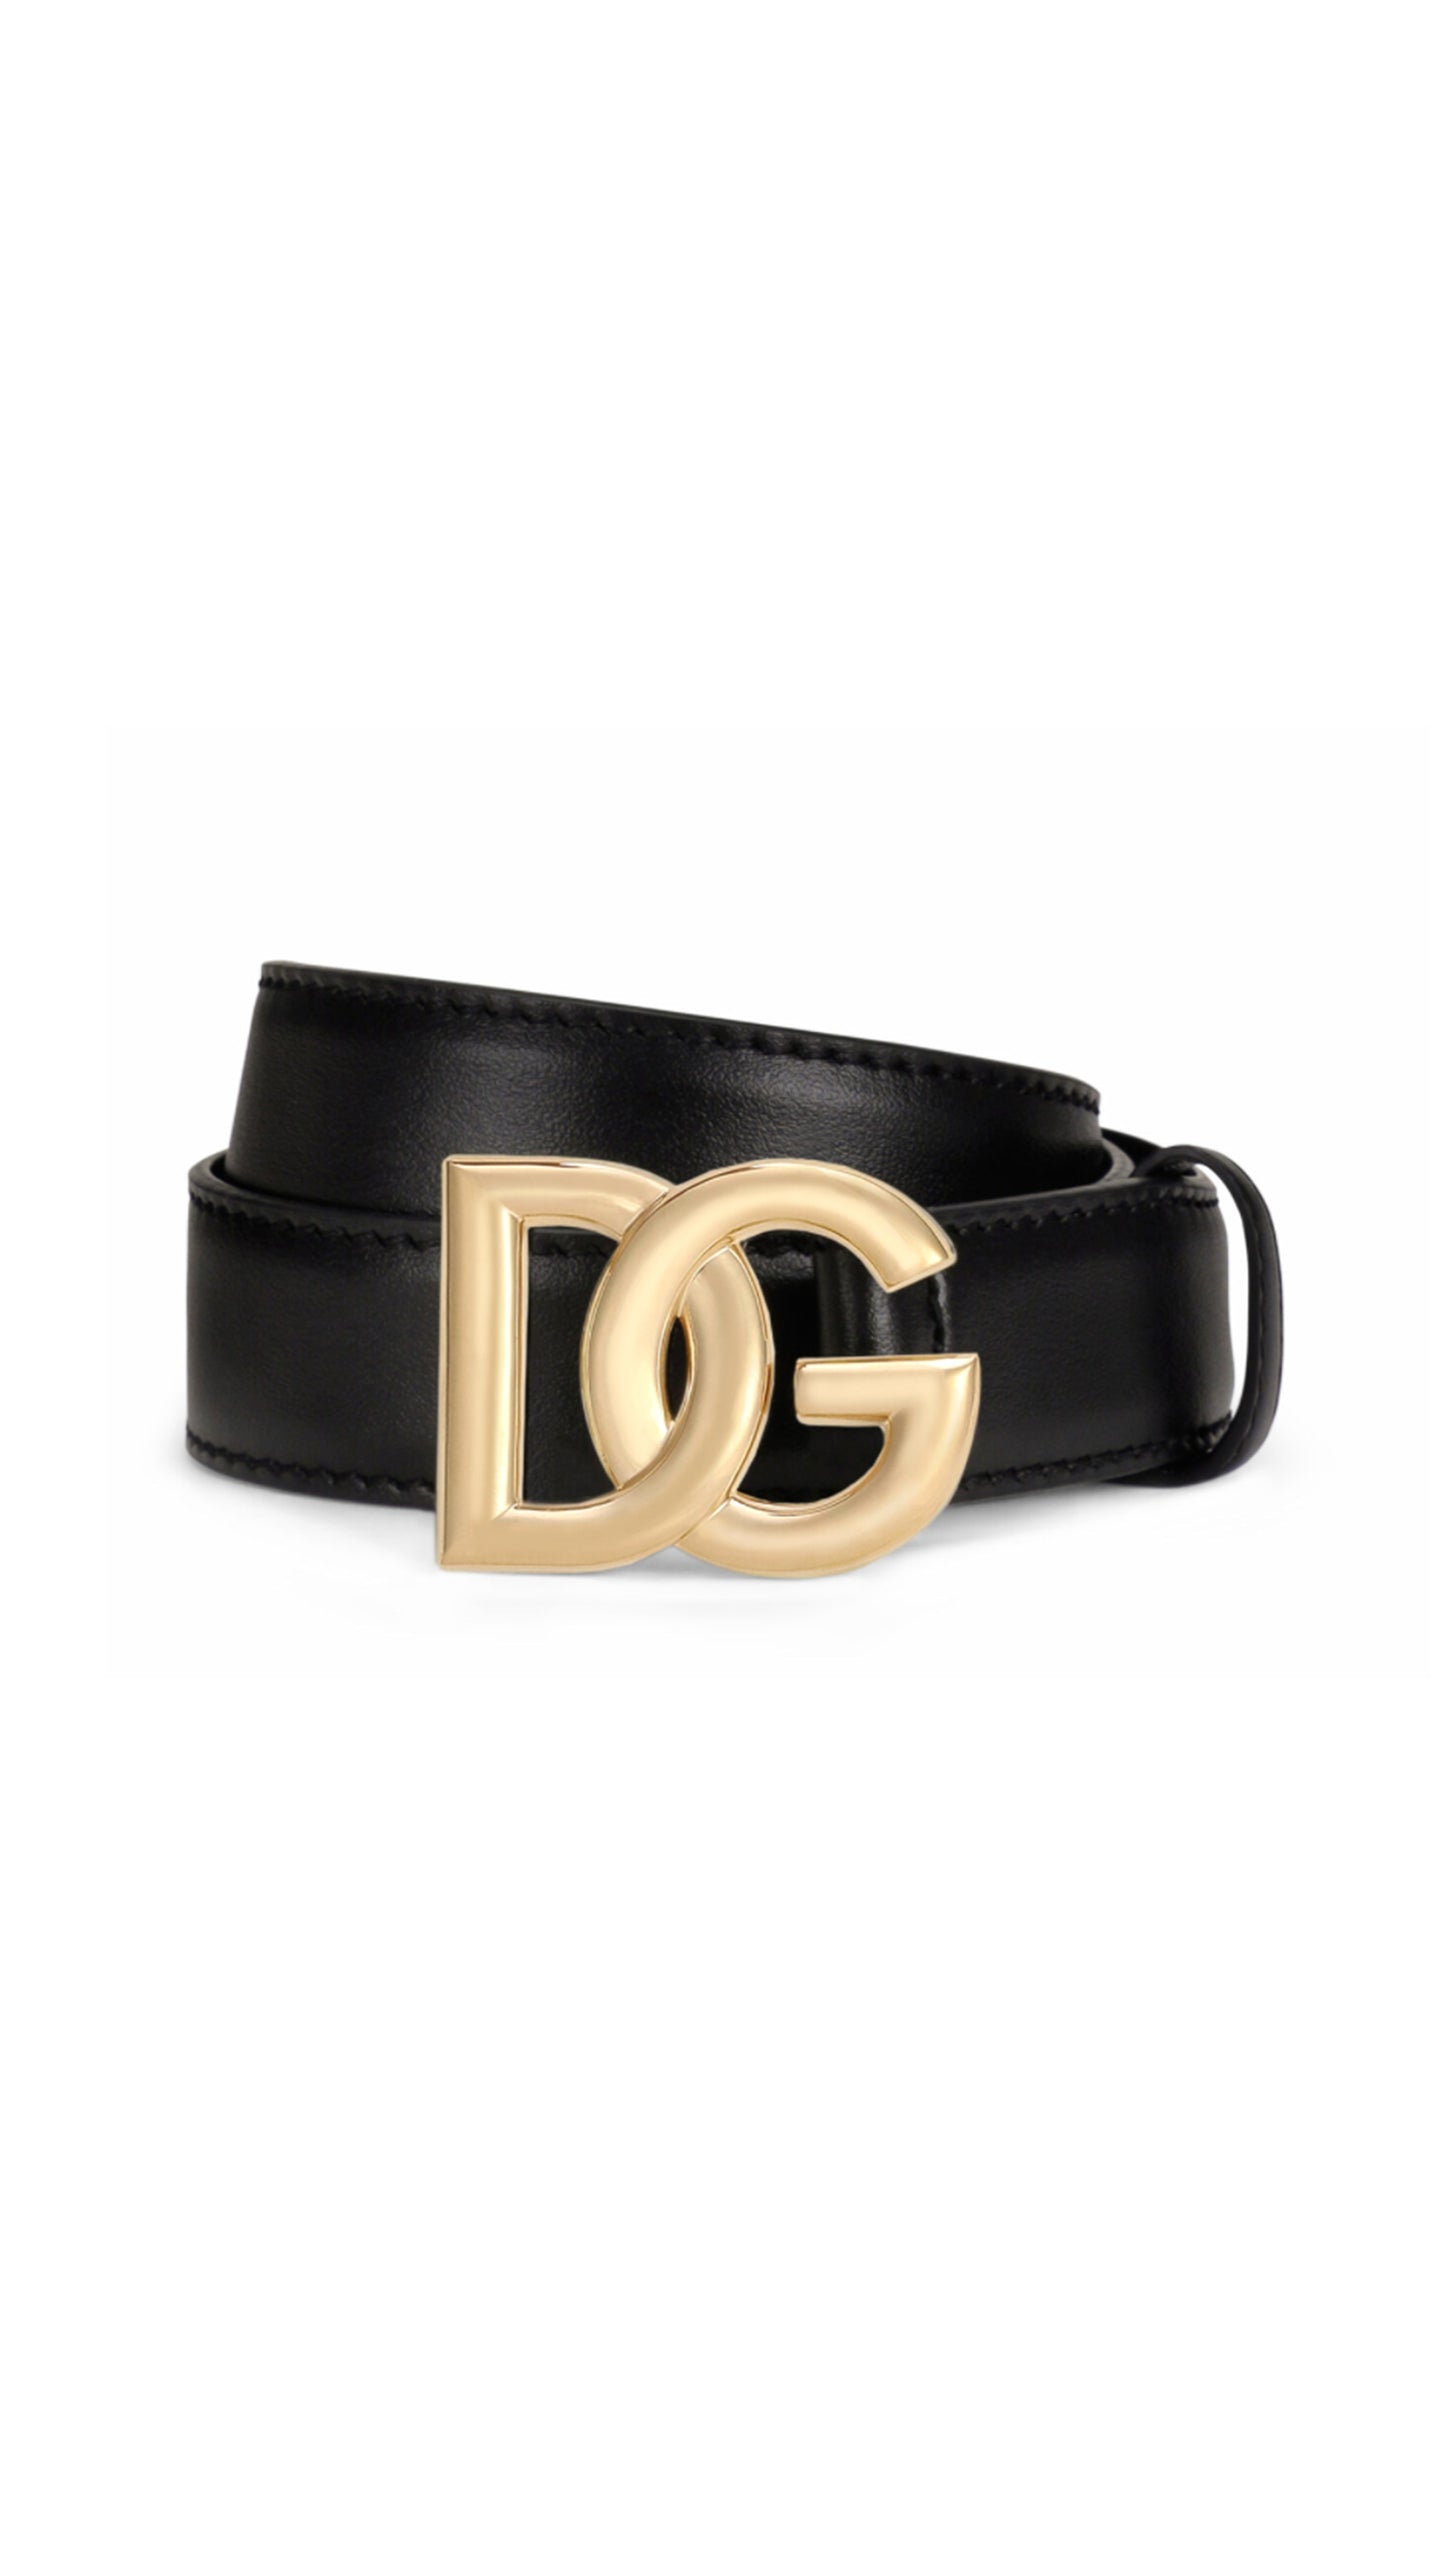 Calfskin belt with DG logo 25mm - Black